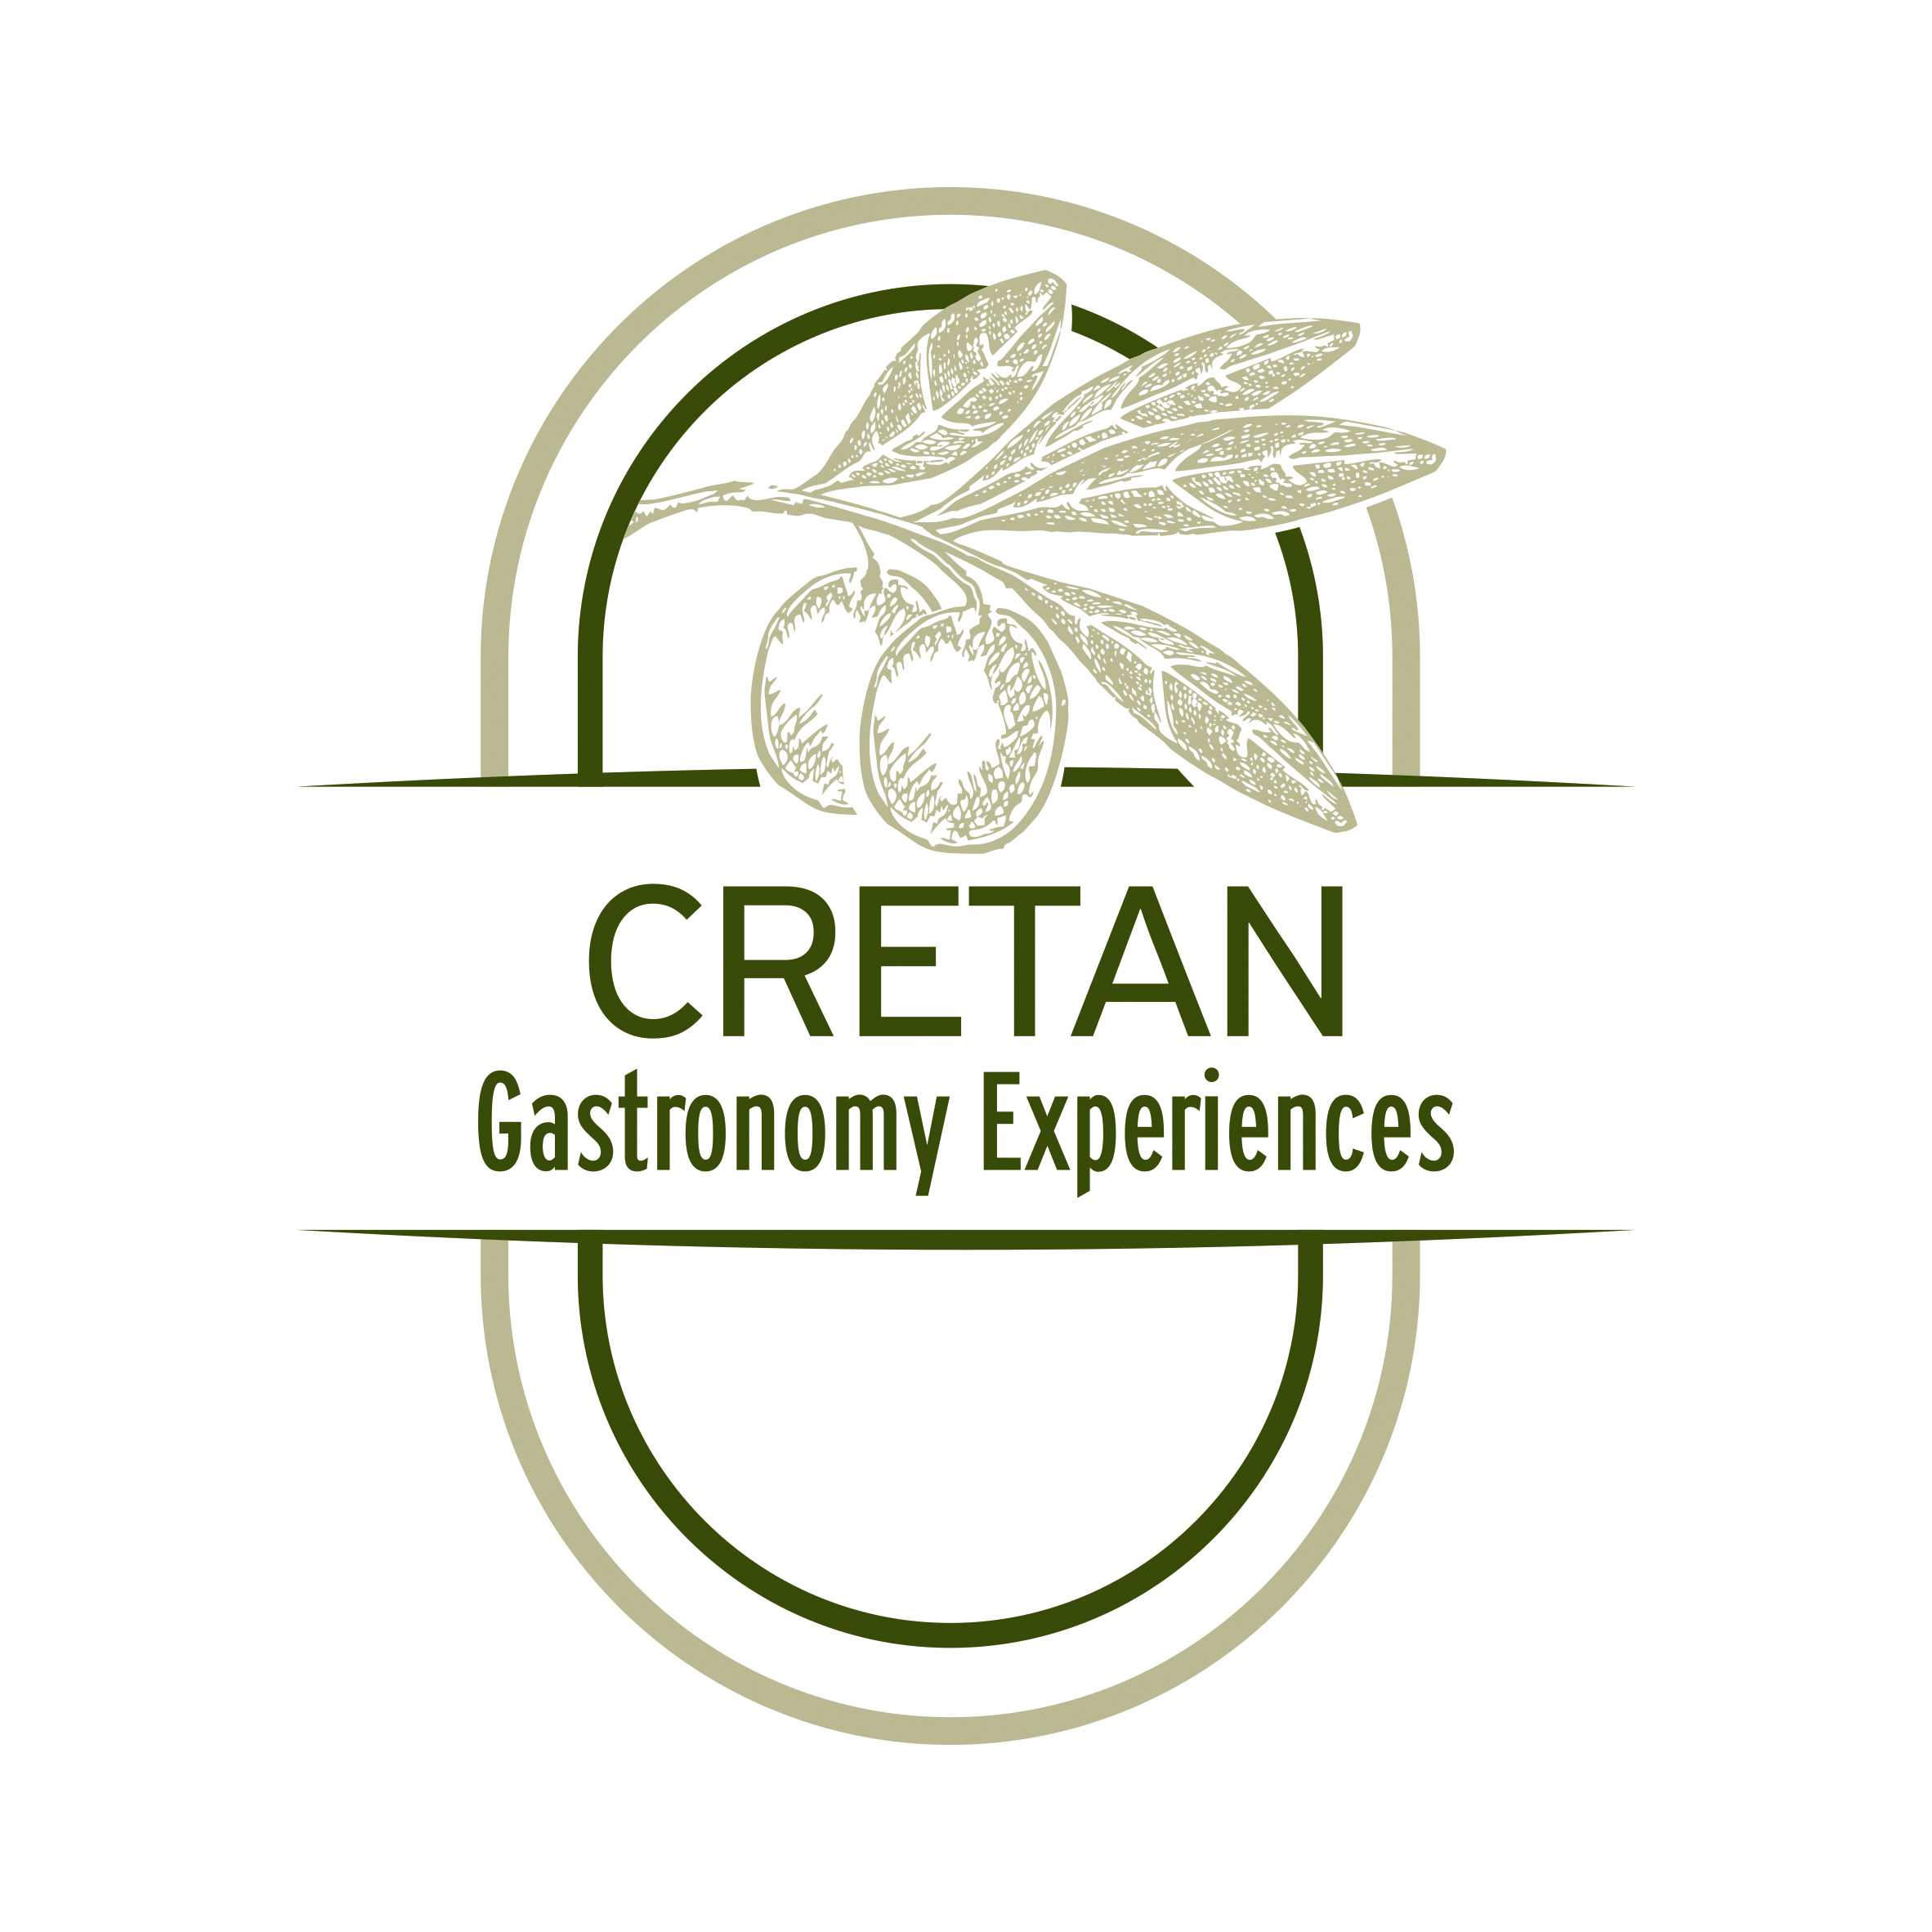 Cretan gastronomy experiences